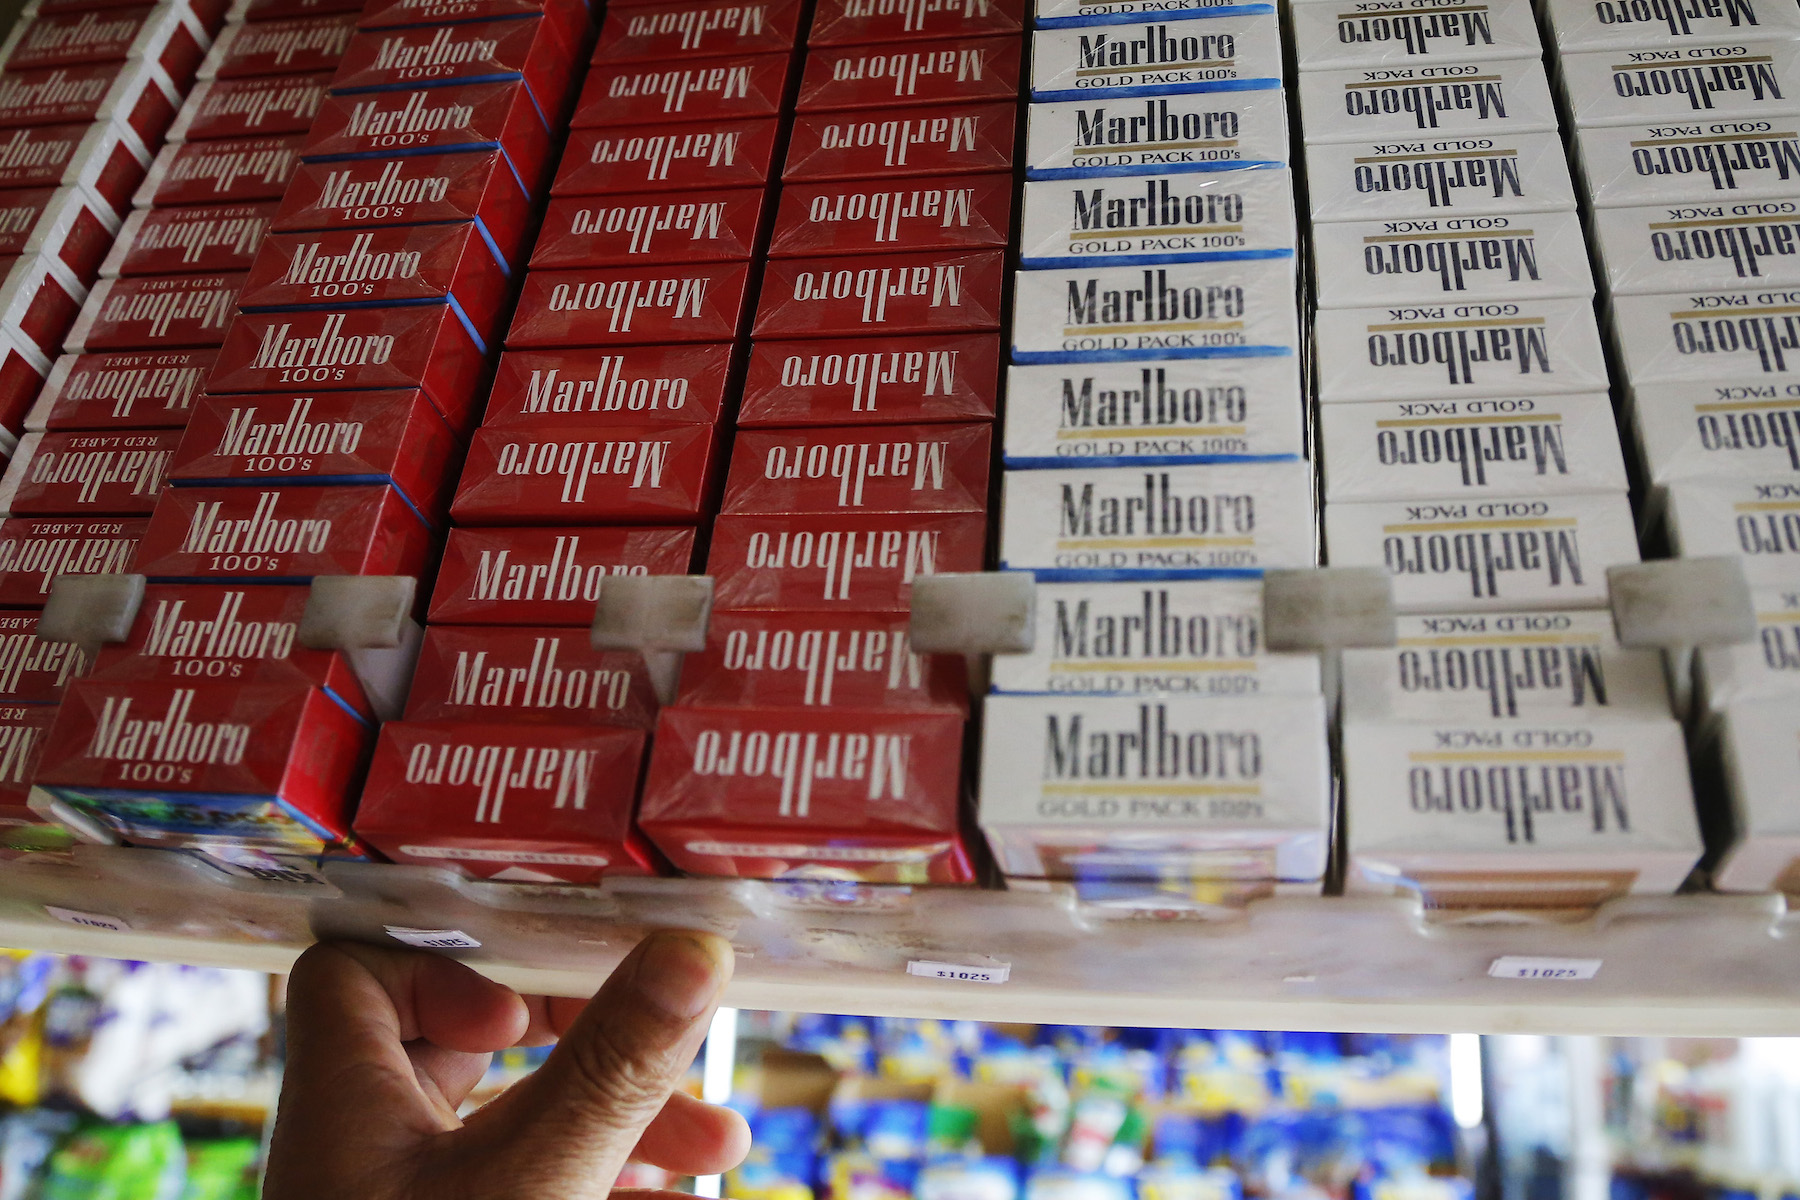 Packs of Marlboro cigarettes a